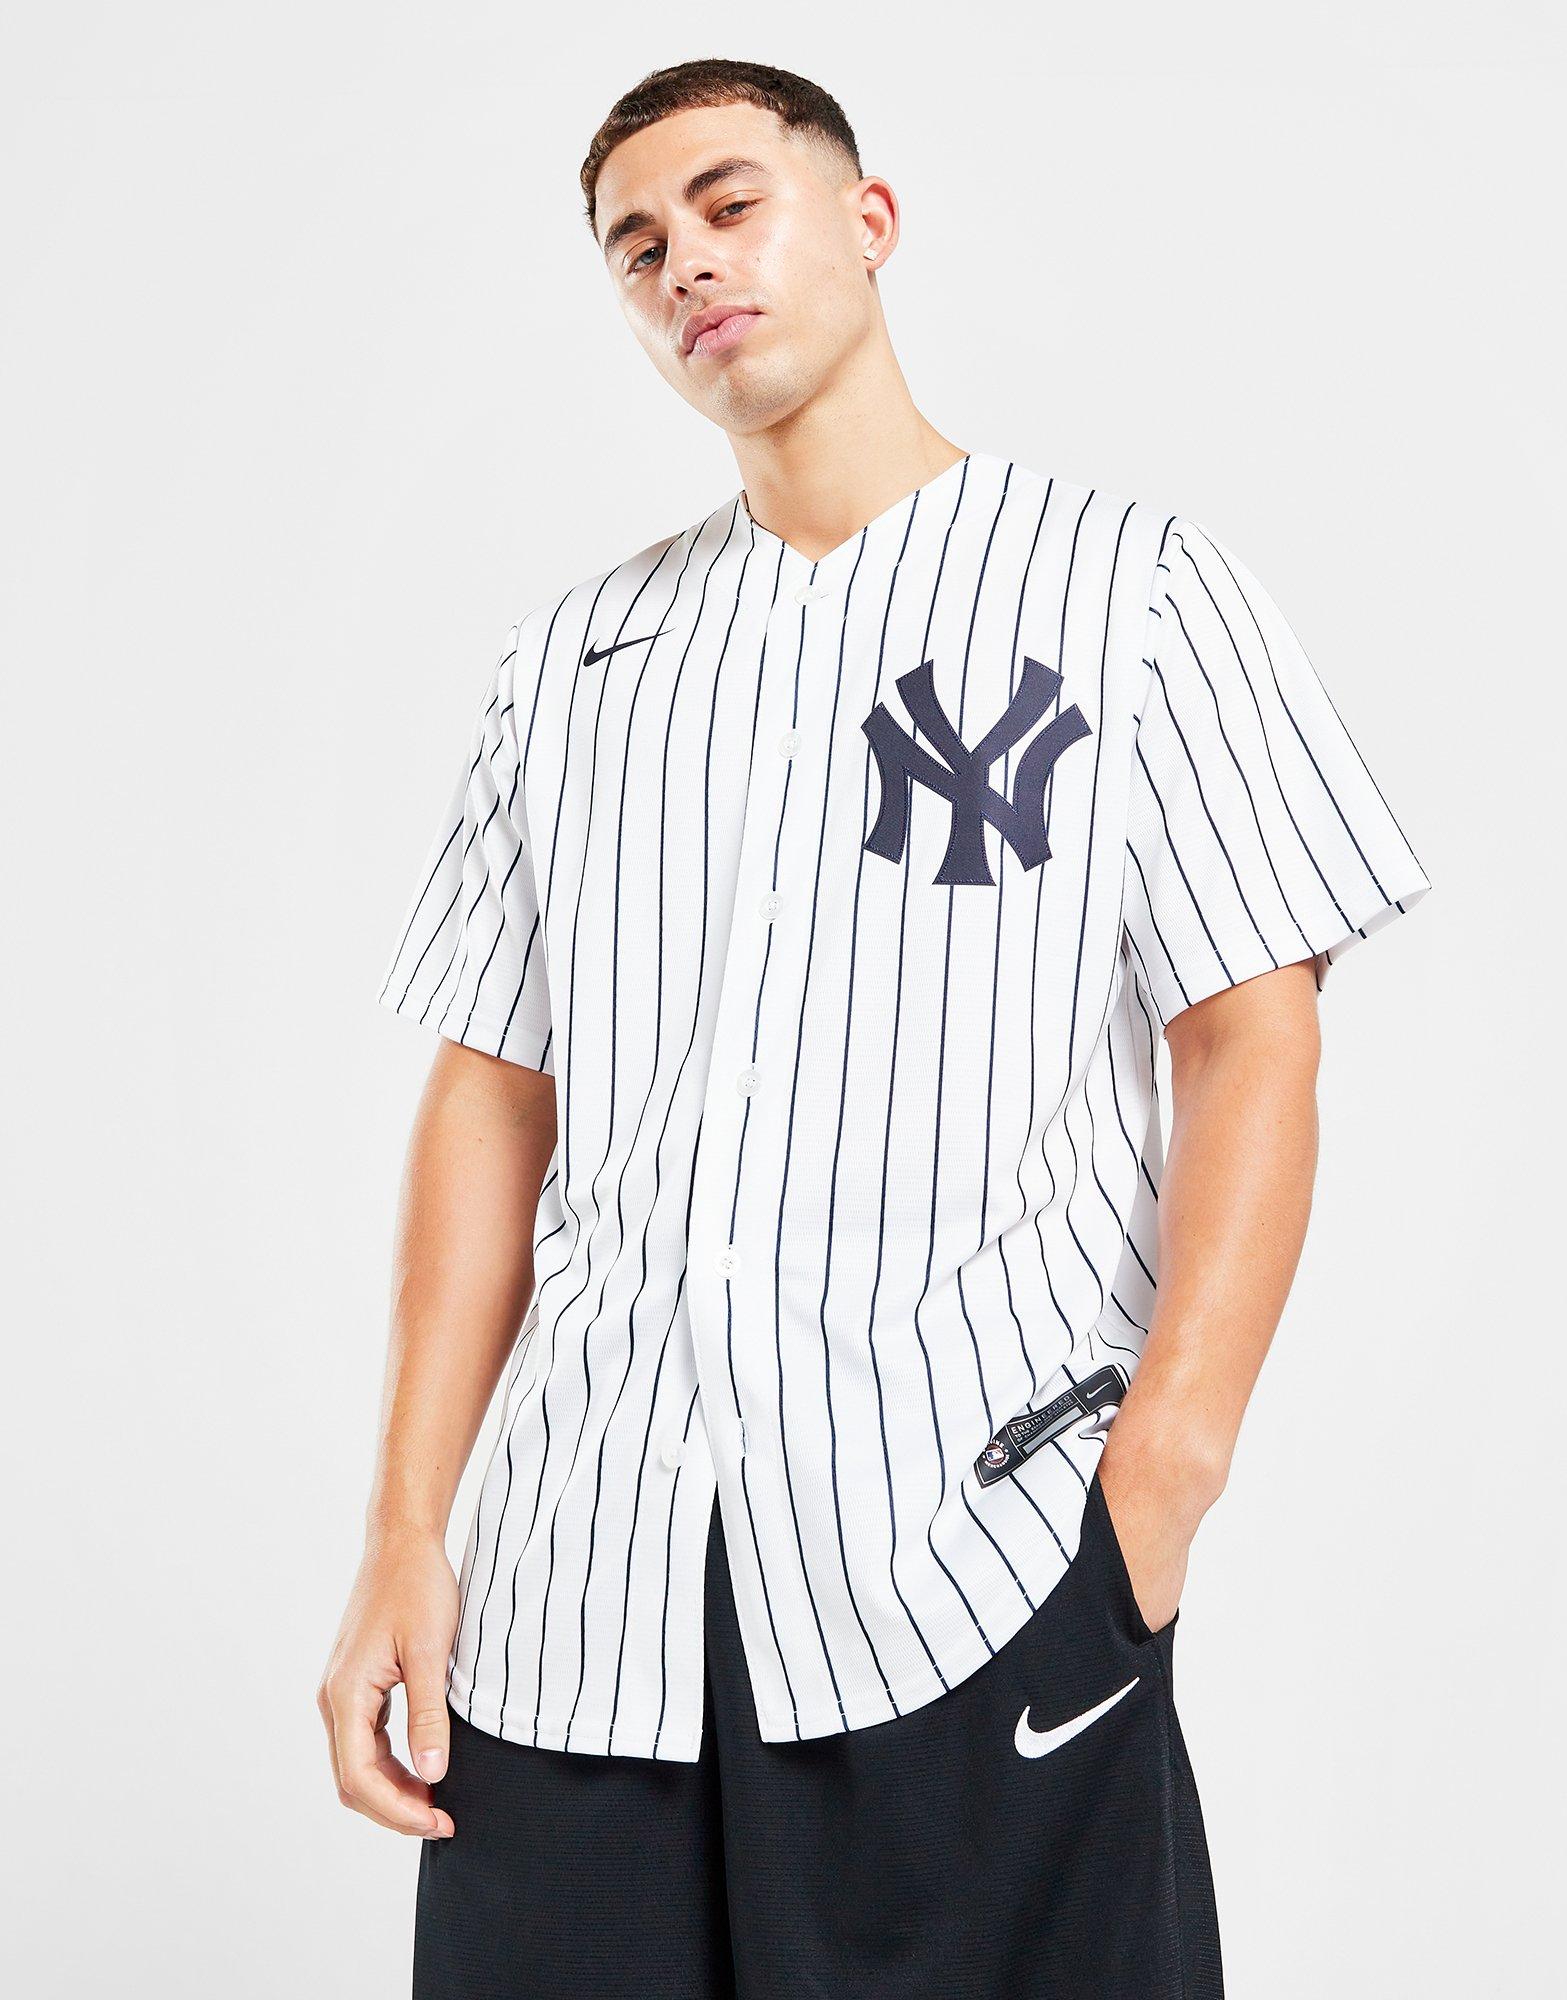 New York Yankees Baseball Jersey